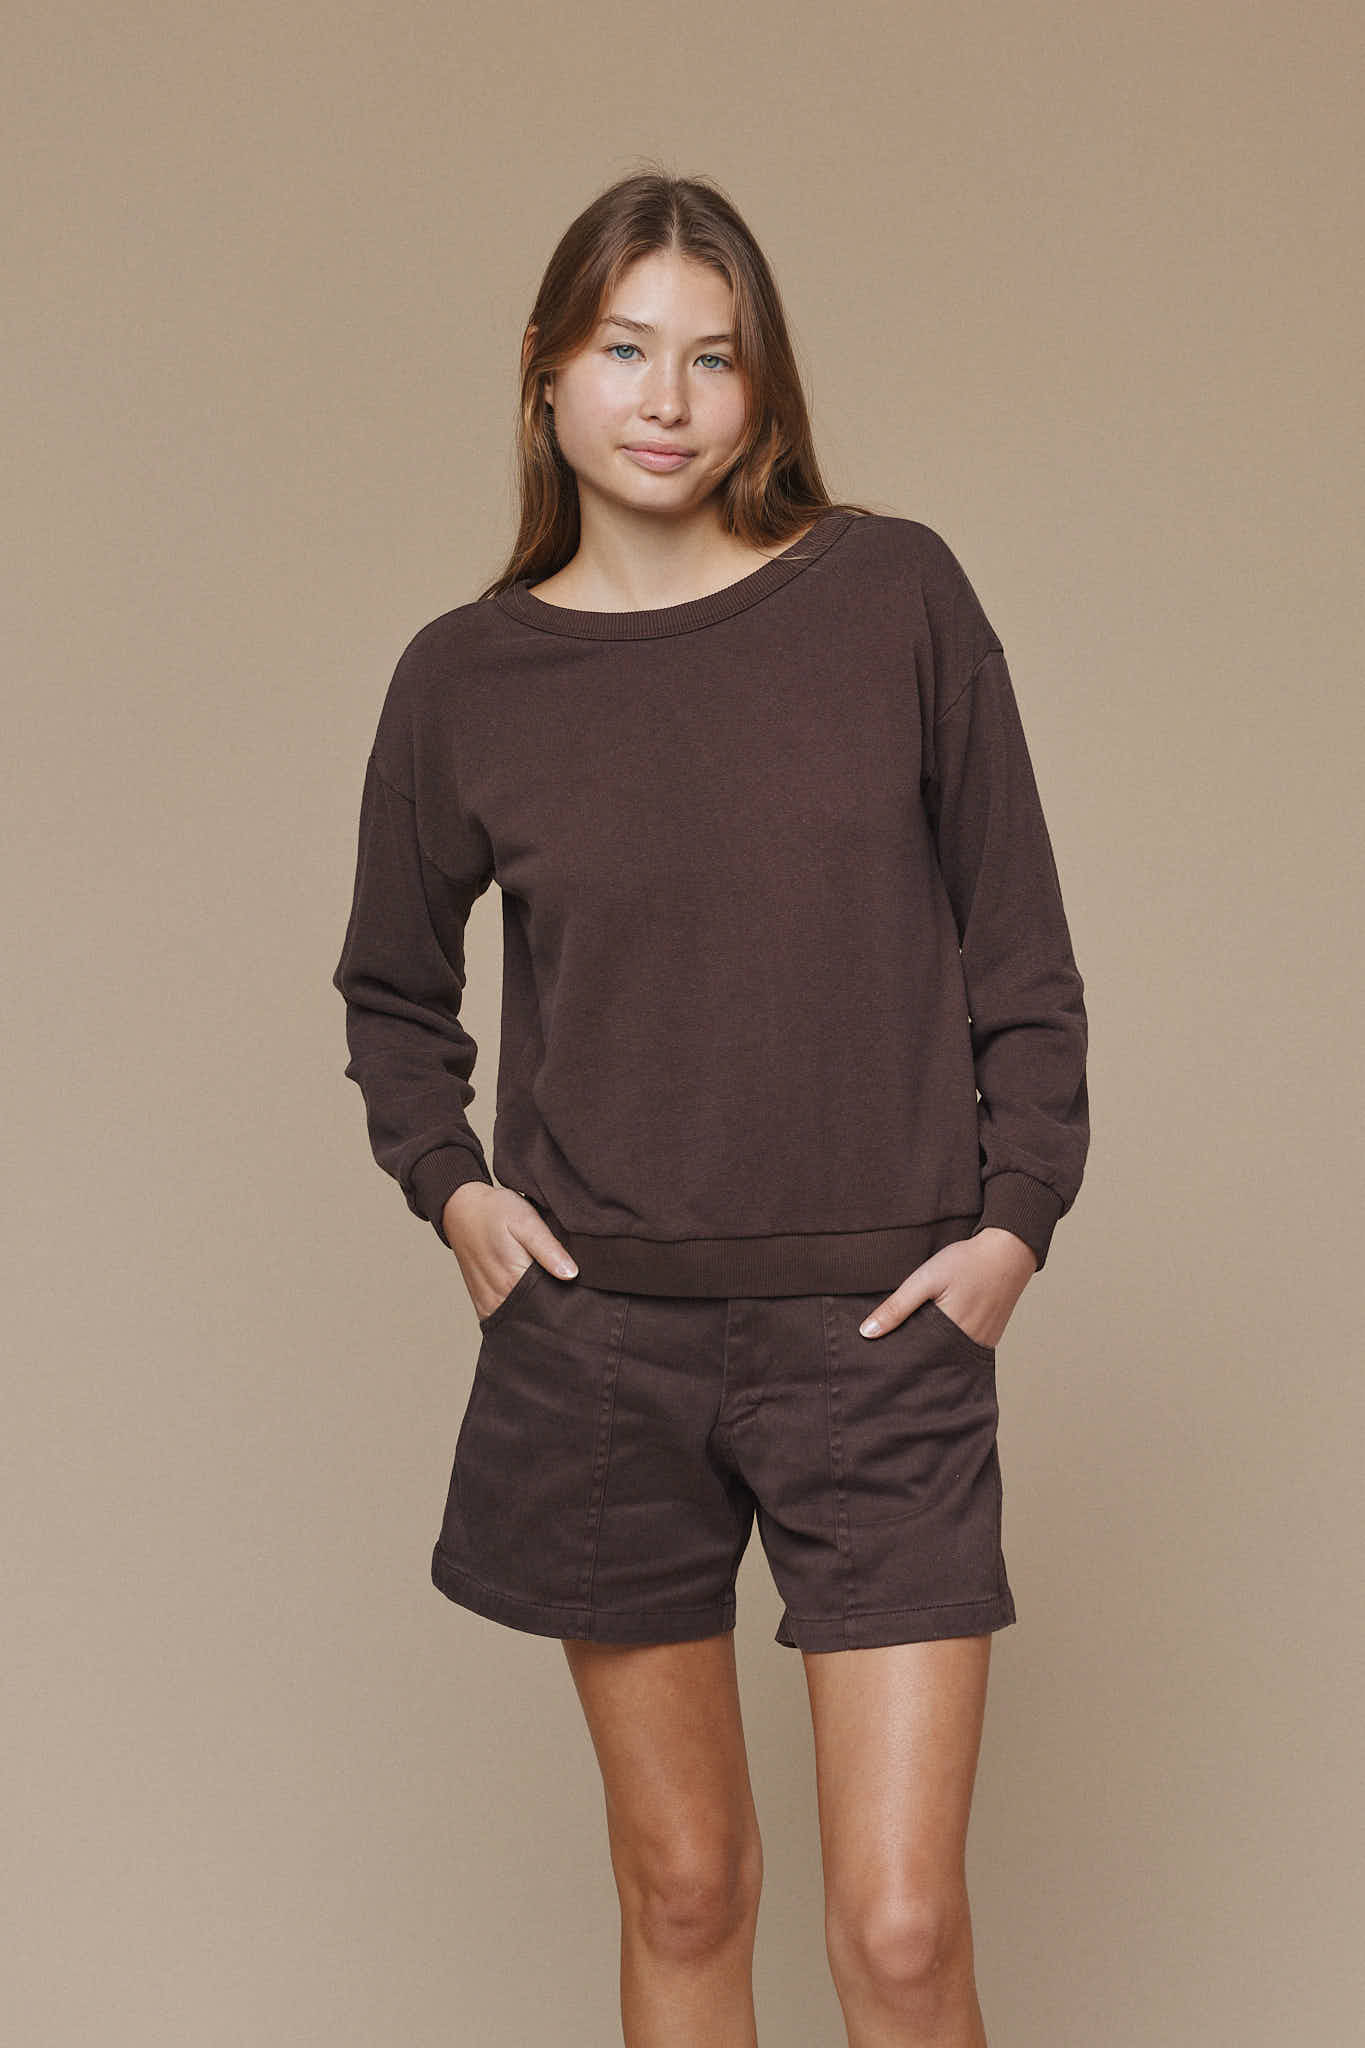 Cruz Cropped Sweatshirt | Jungmaven Hemp Clothing & Accessories / model_desc: Katriel is 5’9” wearing S